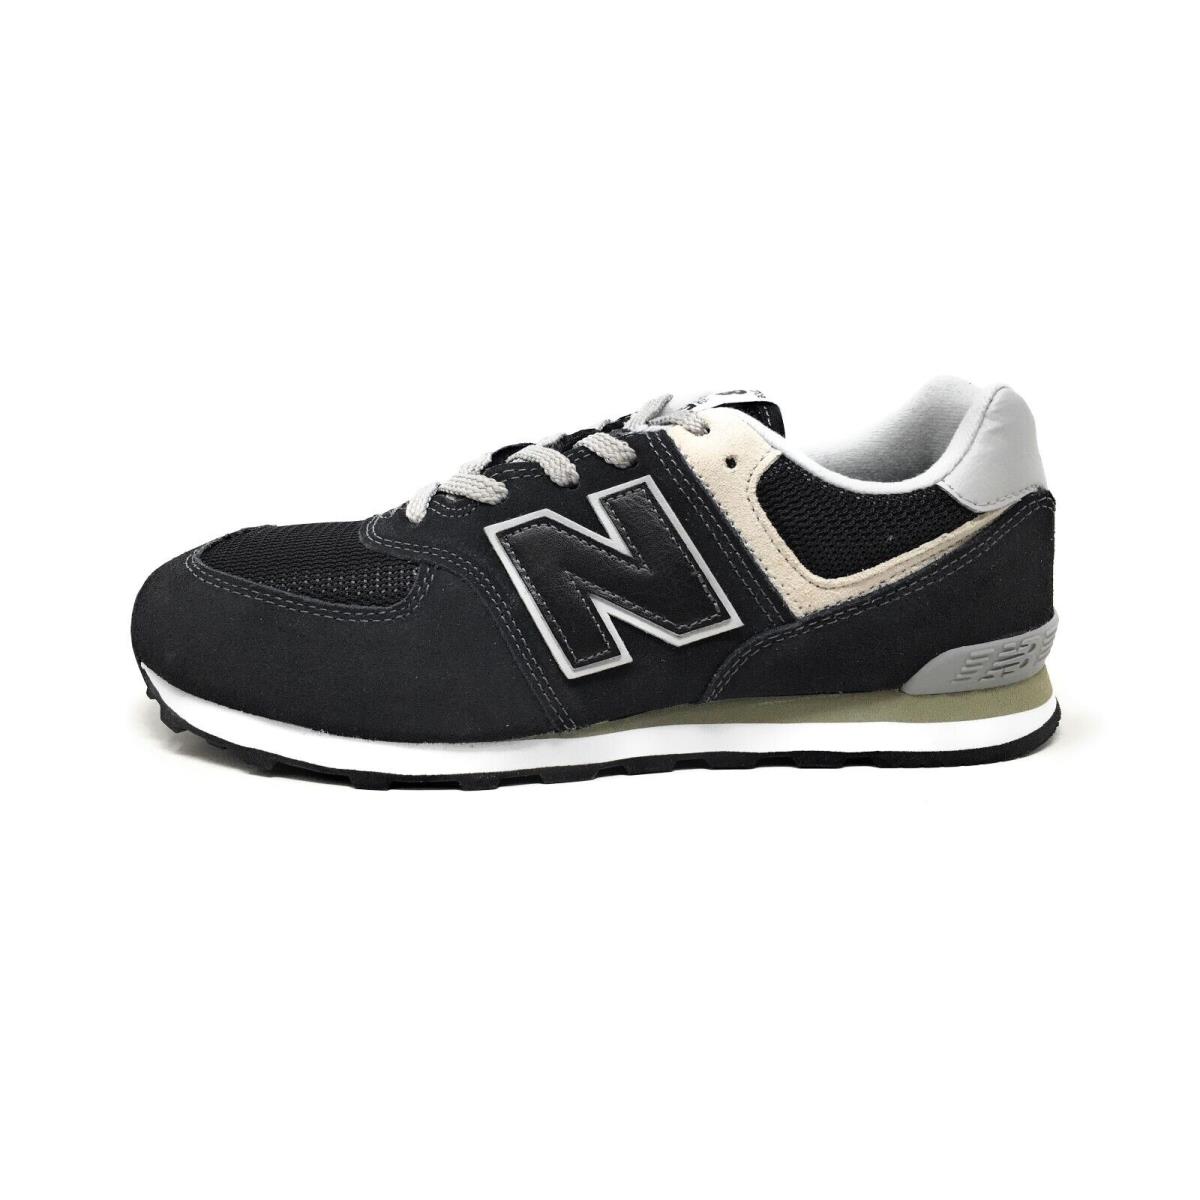 New Balance 574 Classic Big Kids Running Shoes Sneakers GC574GK - Black/white